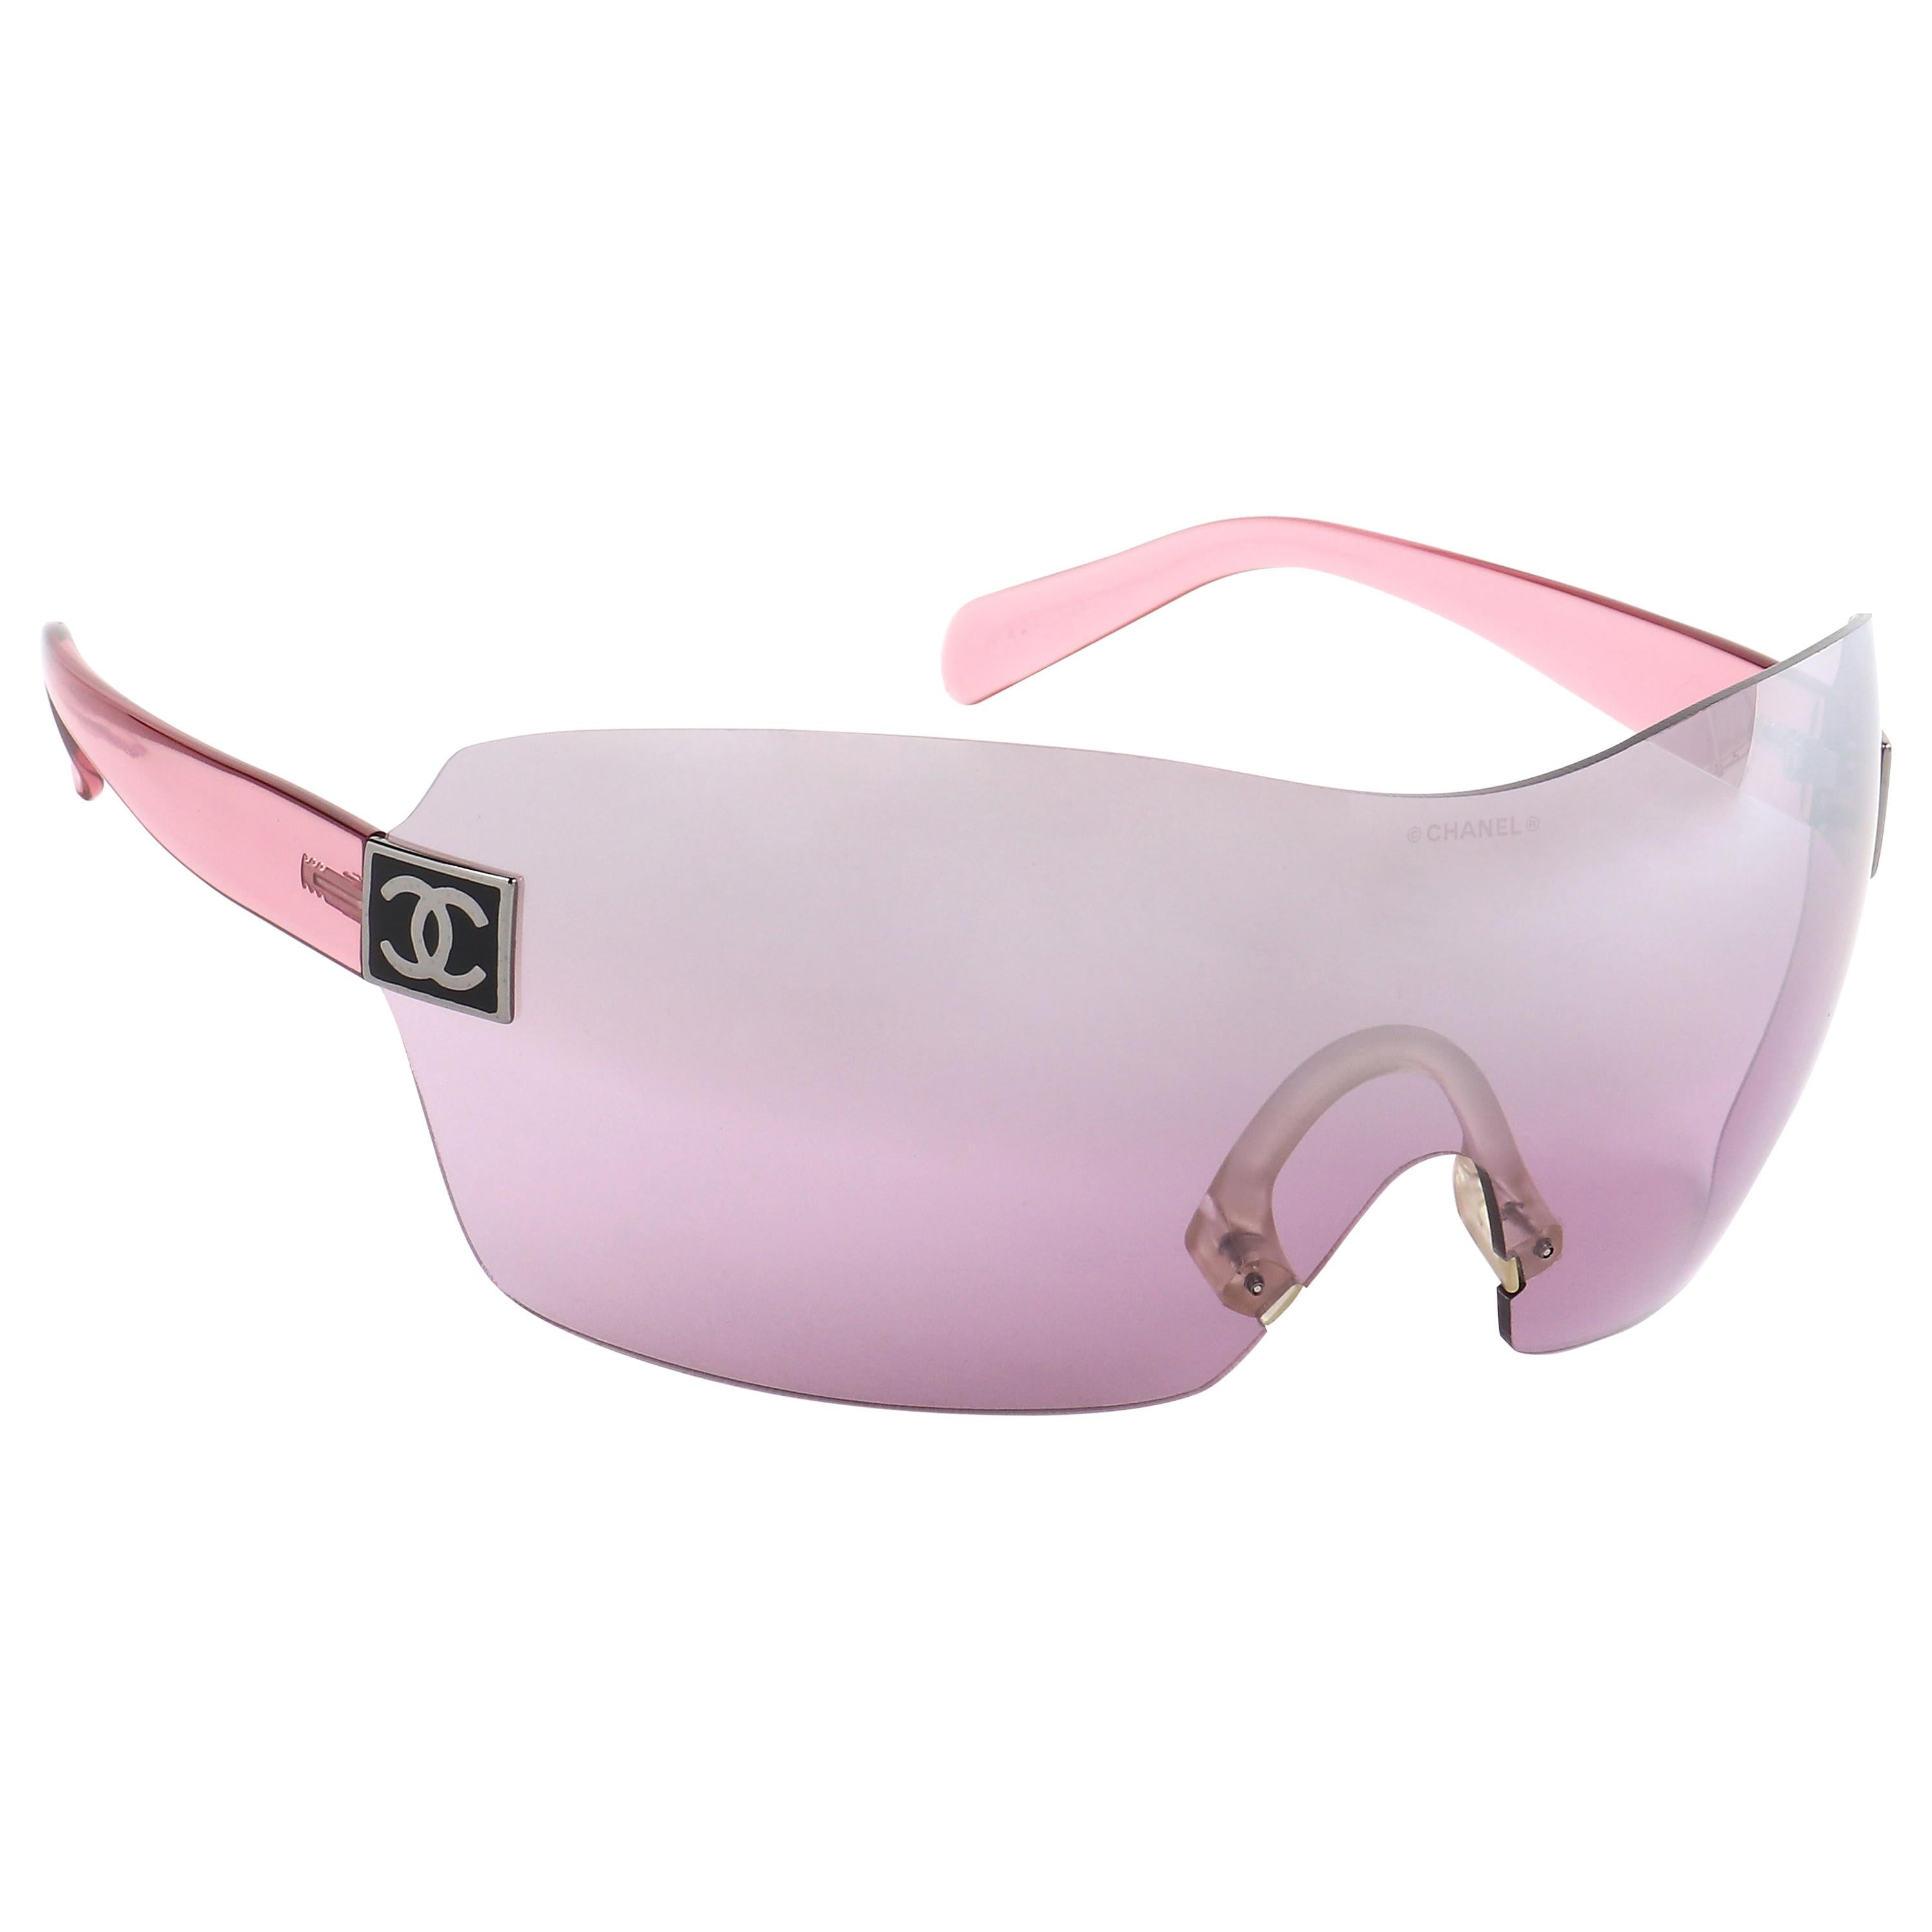 Sunglasses Chanel Pink in Plastic - 25302777